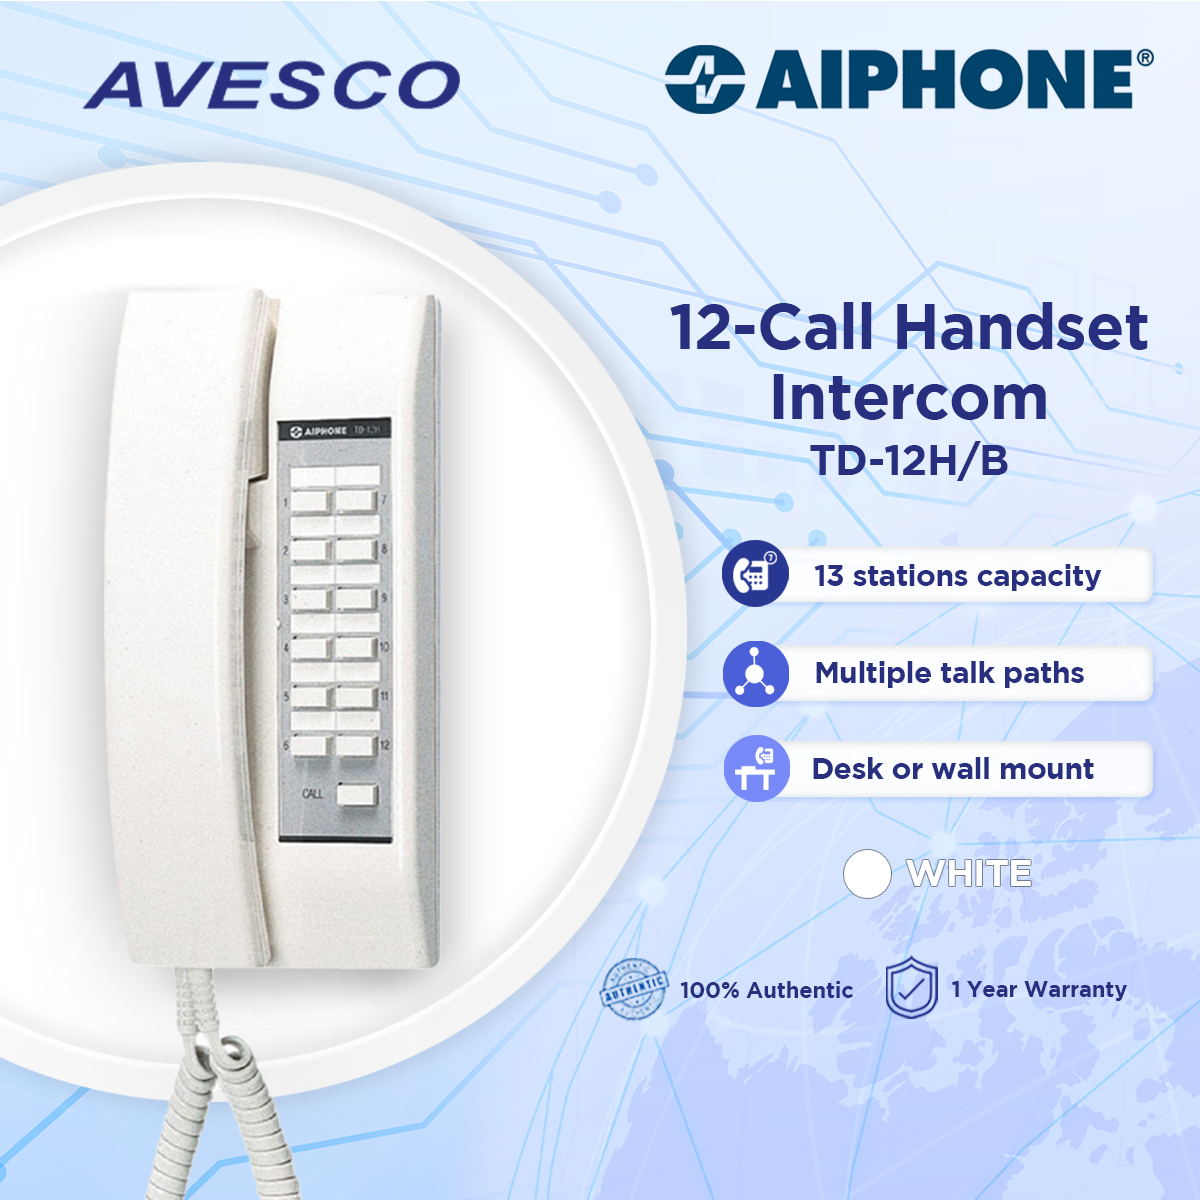 12-Call Handset Intercom TD-12H/B Aiphone Avesco Lazada PH